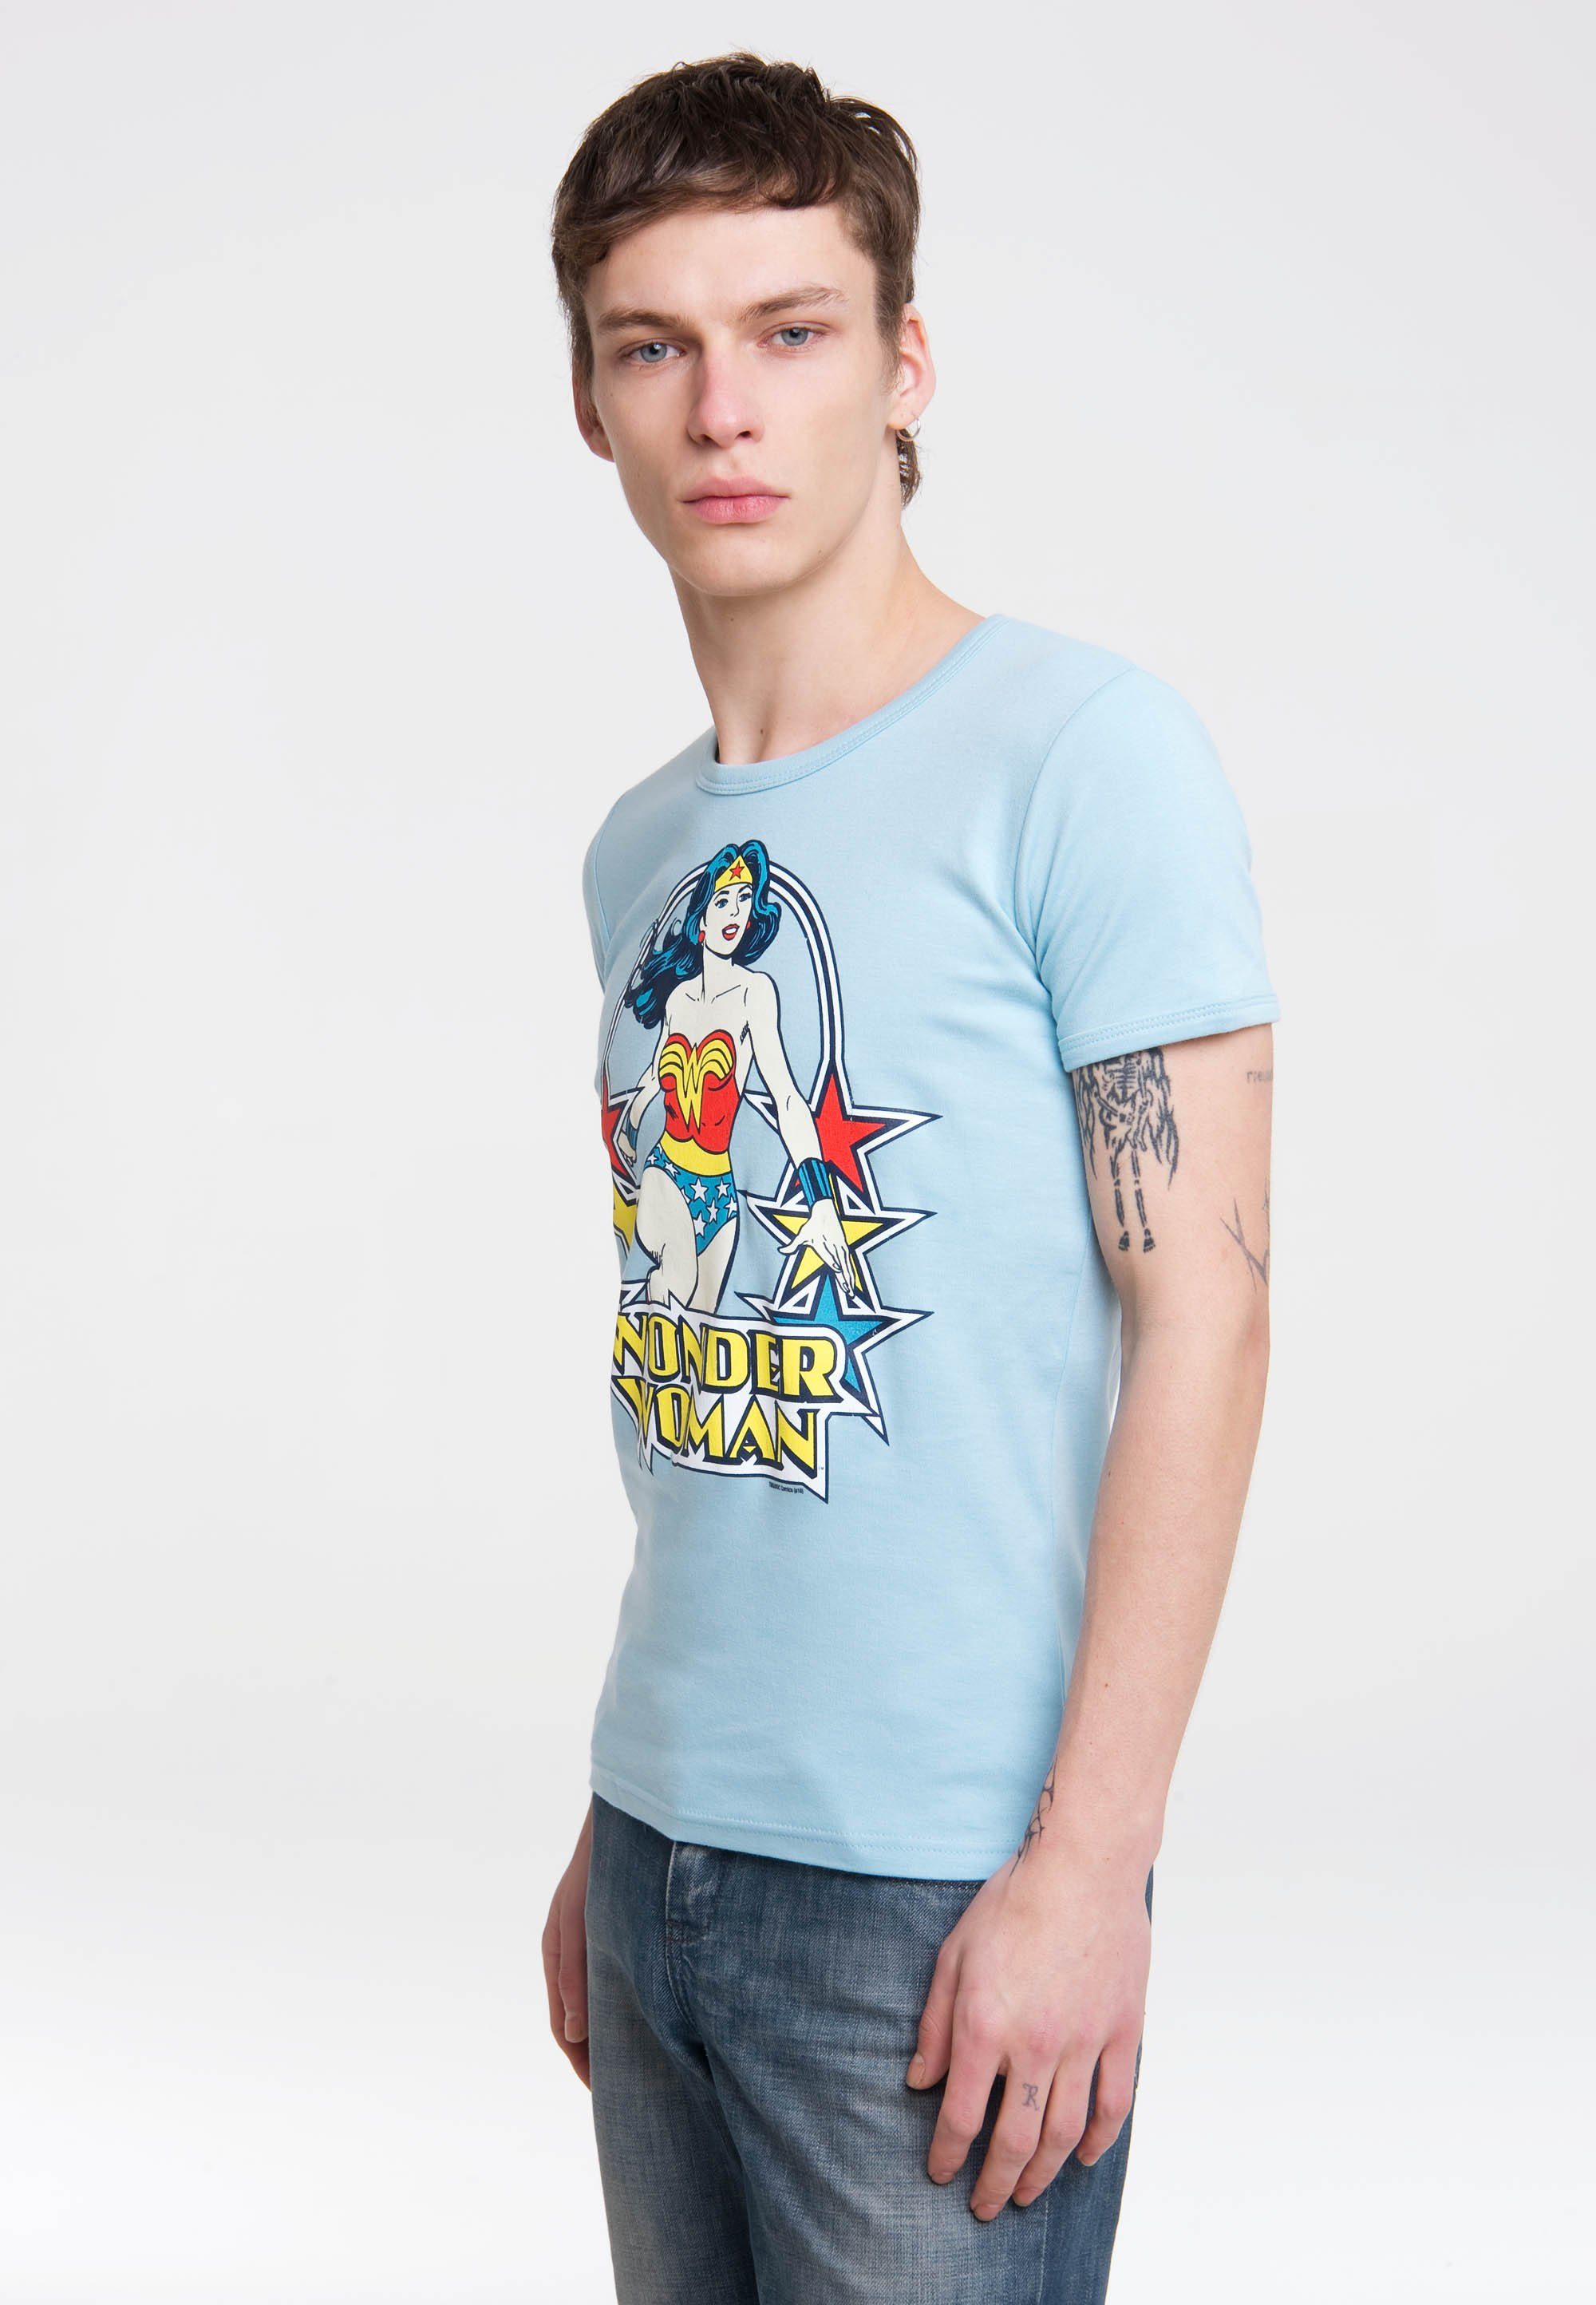 LOGOSHIRT T-Shirt Wonder Woman Retro-Print trendigem mit blau